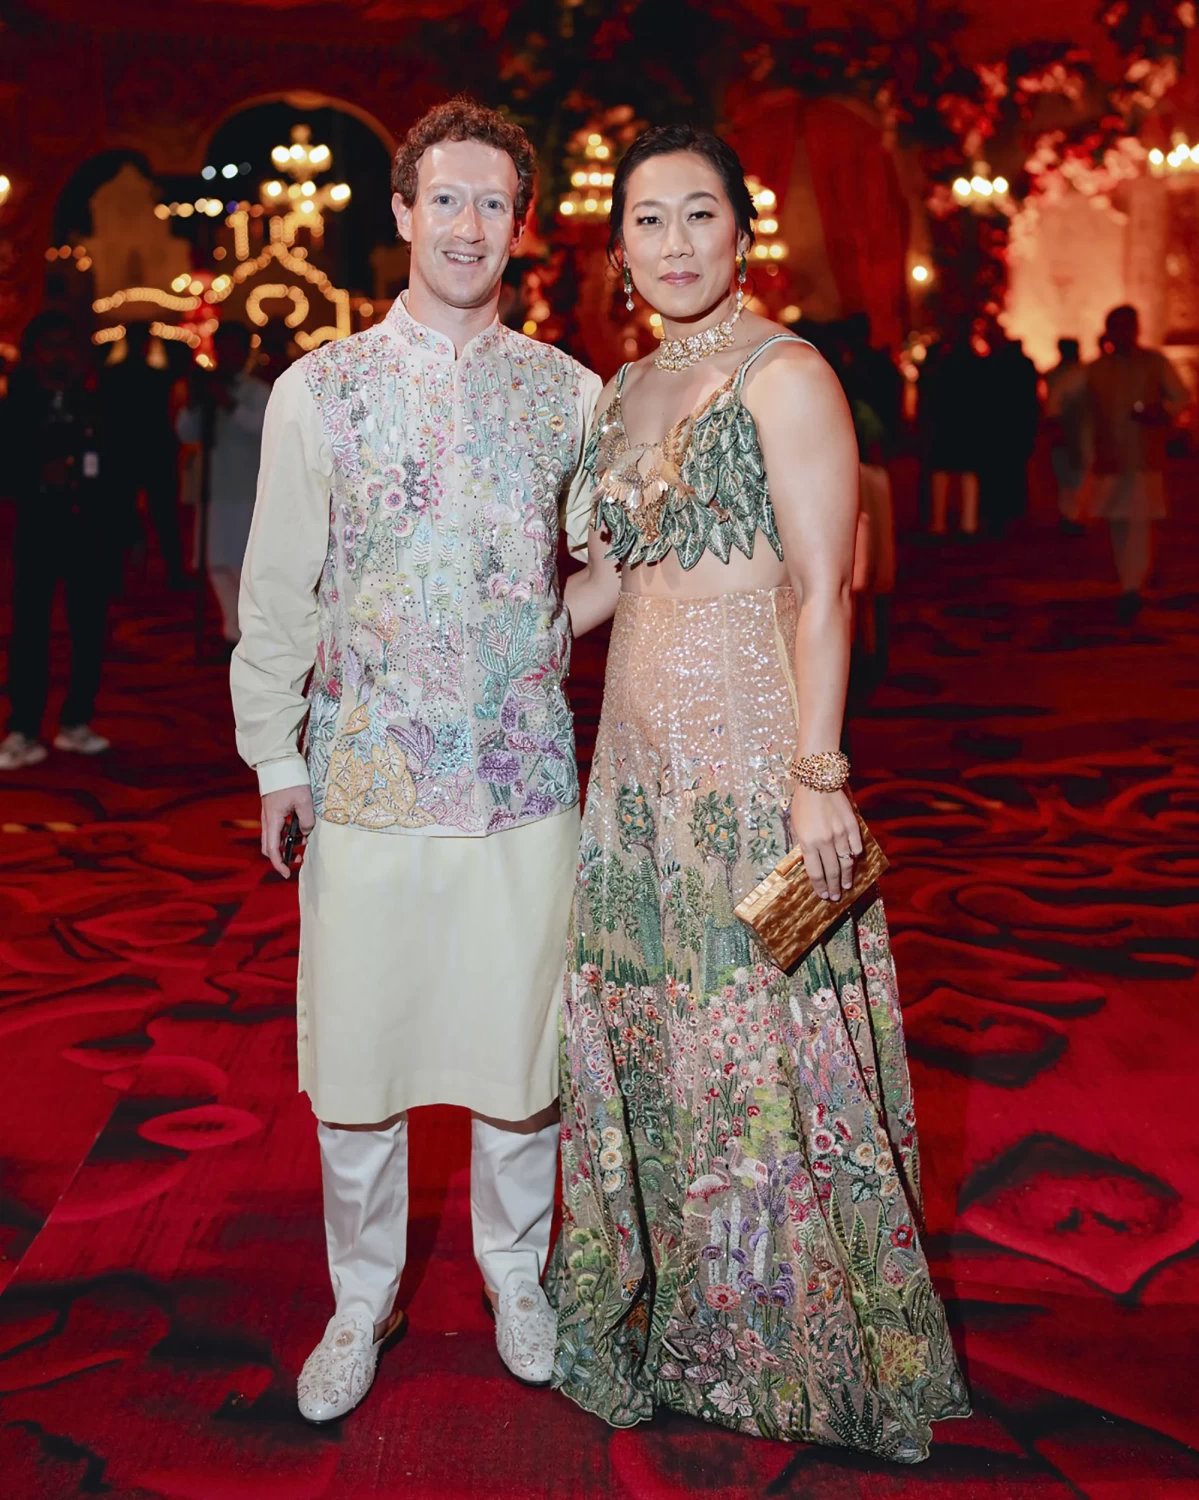 Mark Zuckerberg and his wife Priscilla Chan pose at a pre-wedding bash held for Mukesh Ambani's son Anant Ambani. Reliance group/AP